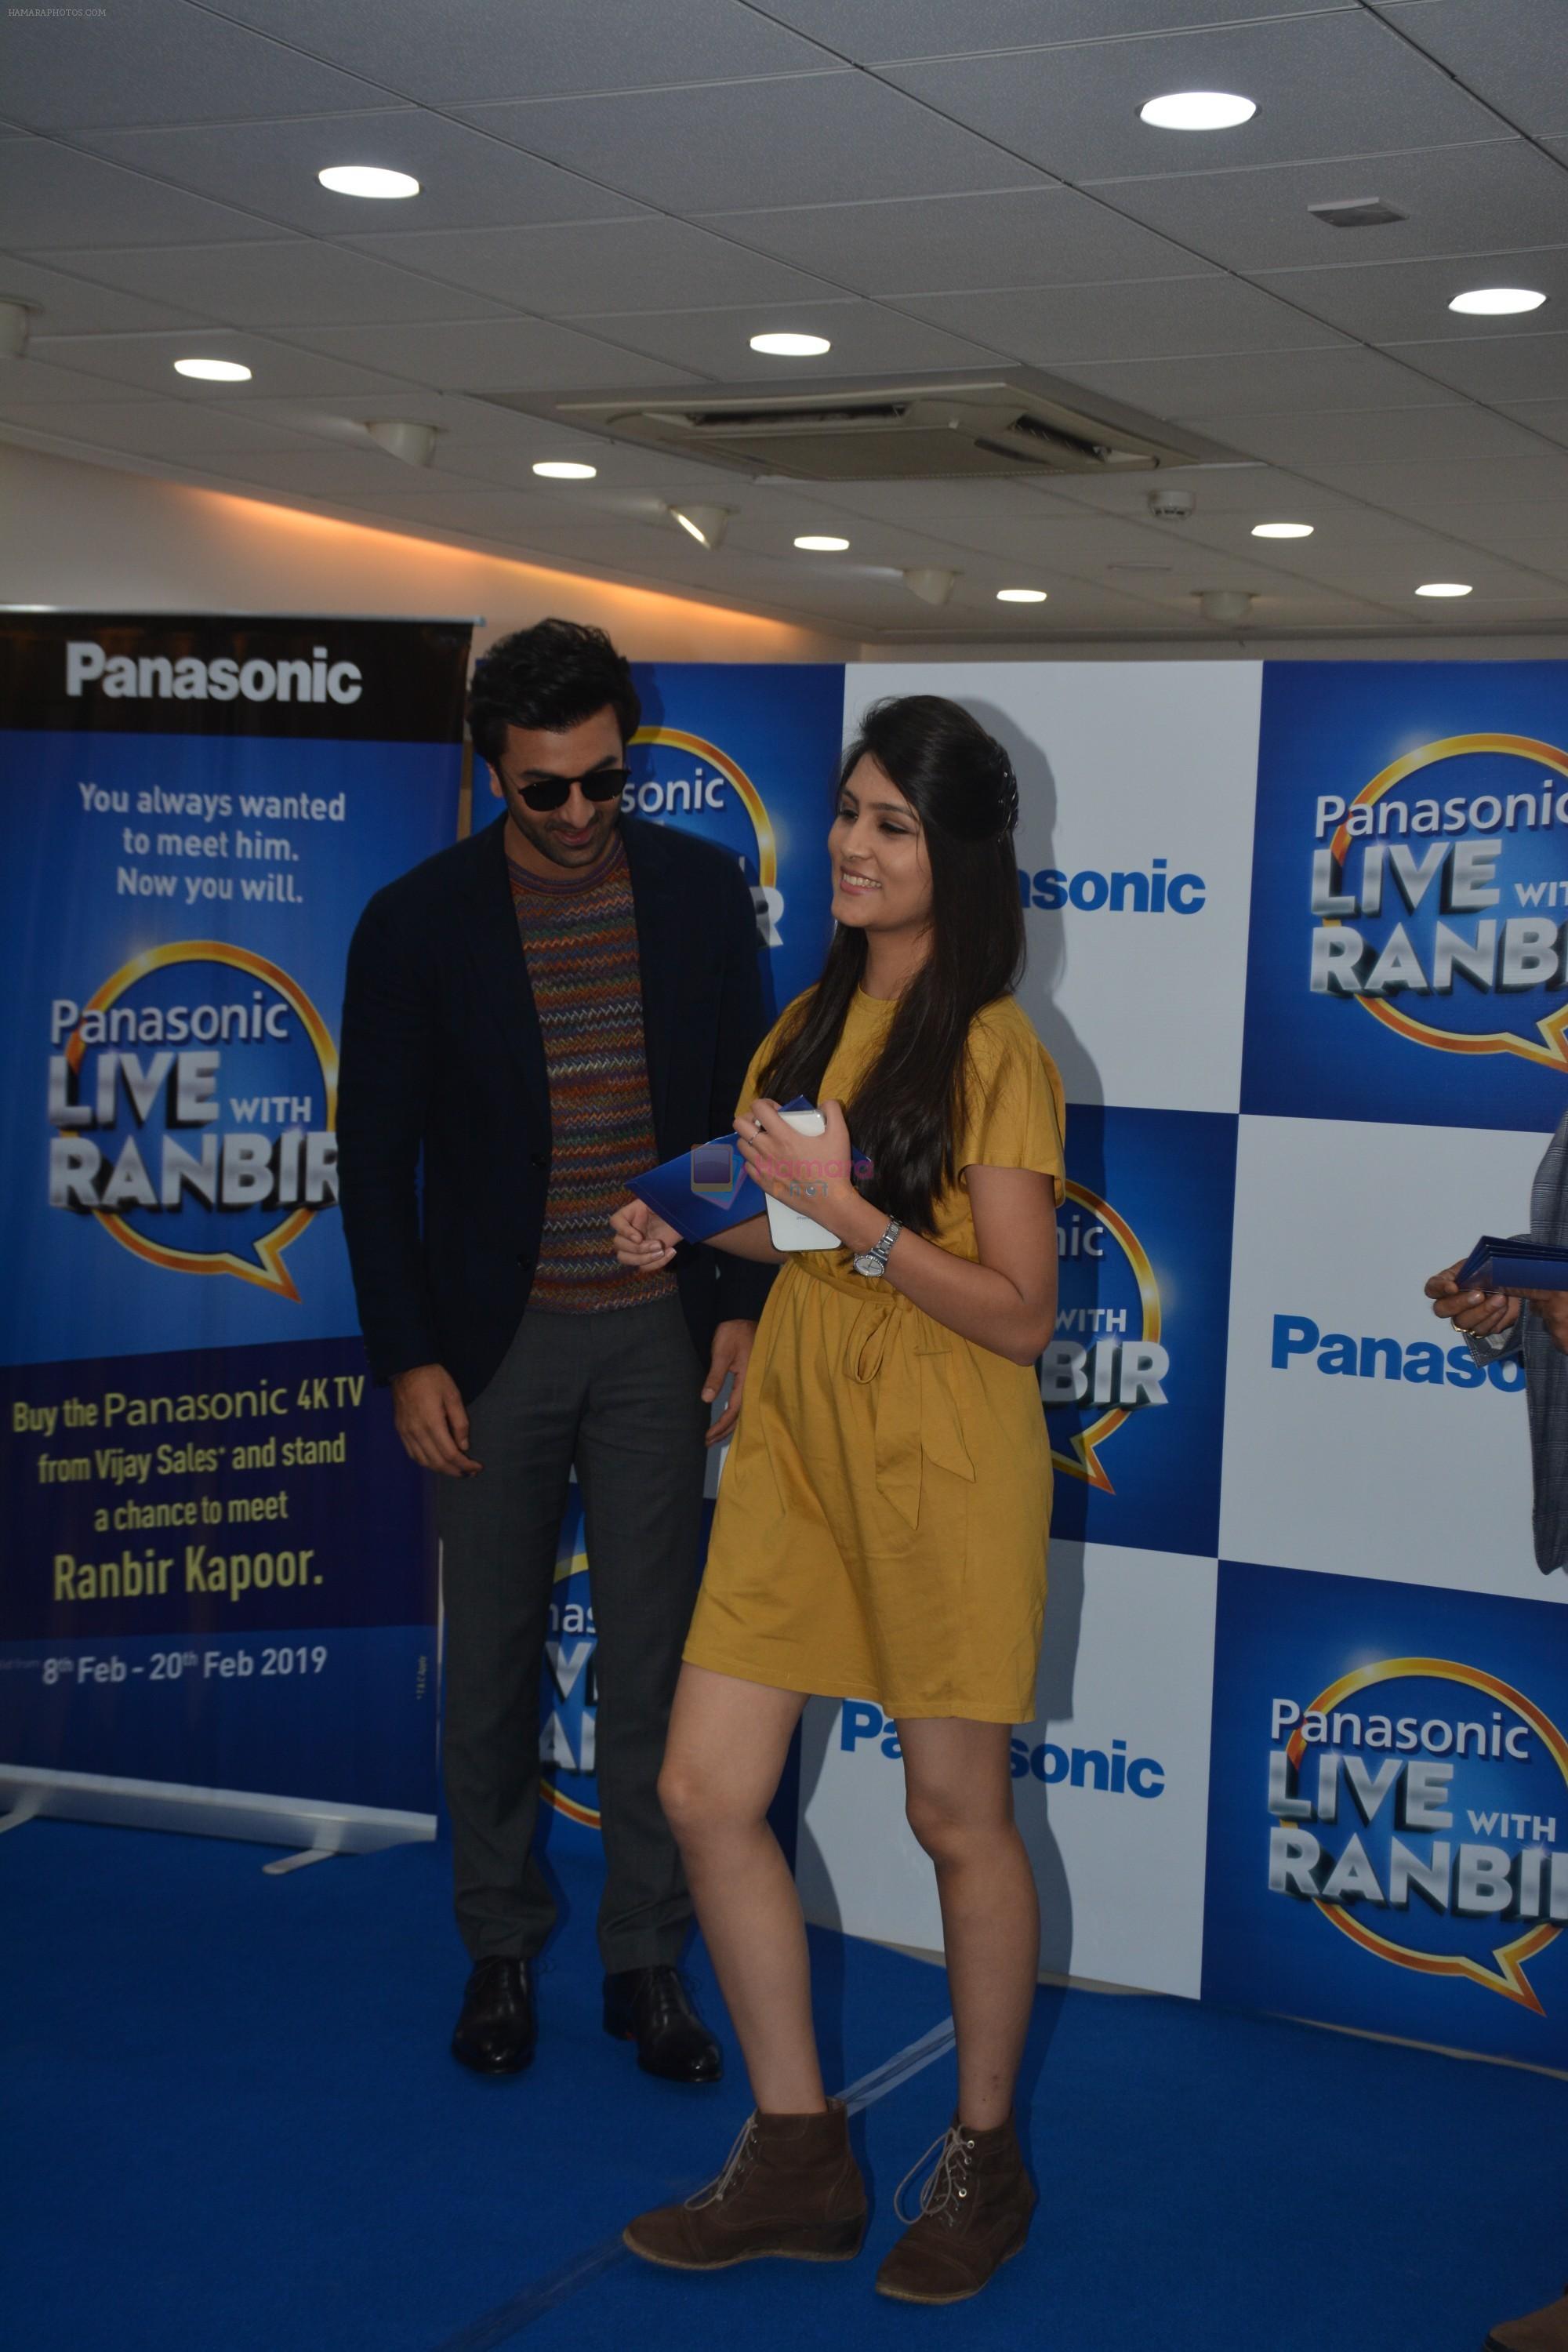 Ranbir Kapoor at Vijay Sales to announce the winner of Winner of Panasonic on 23rd Feb 2019